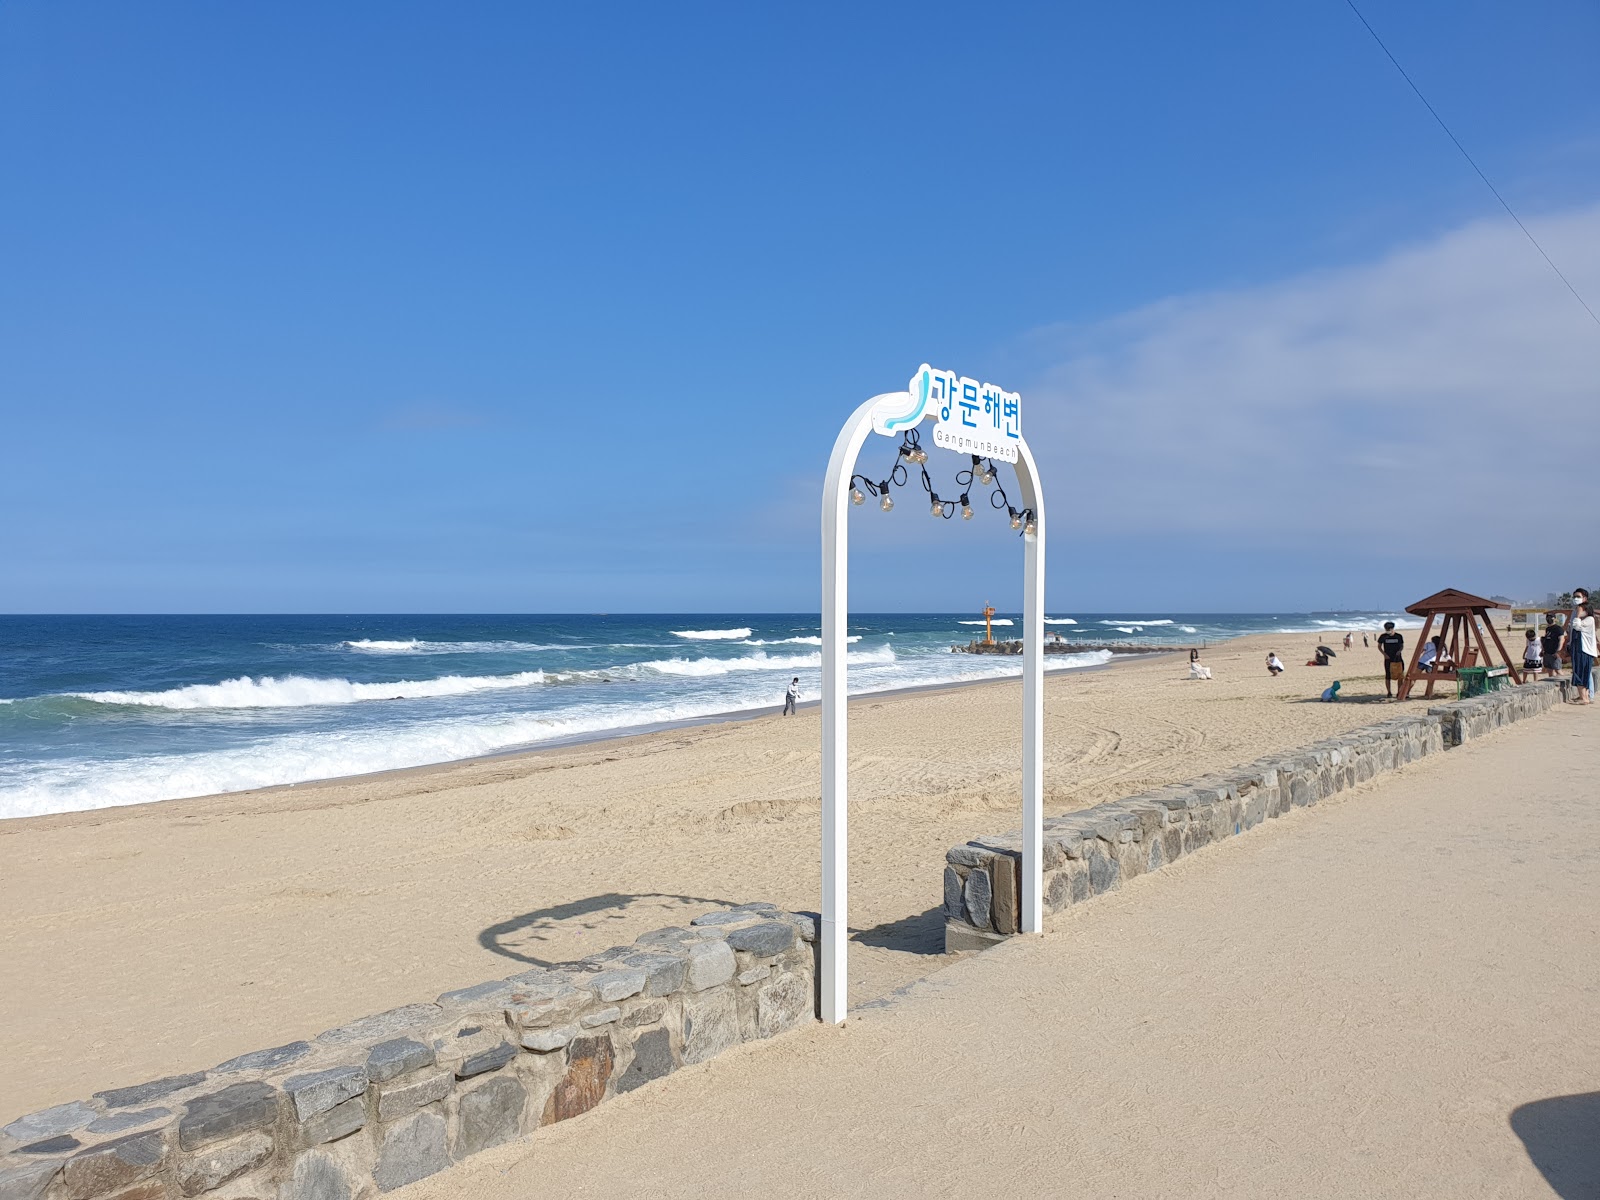 Foto de Gangmun Beach - lugar popular entre os apreciadores de relaxamento